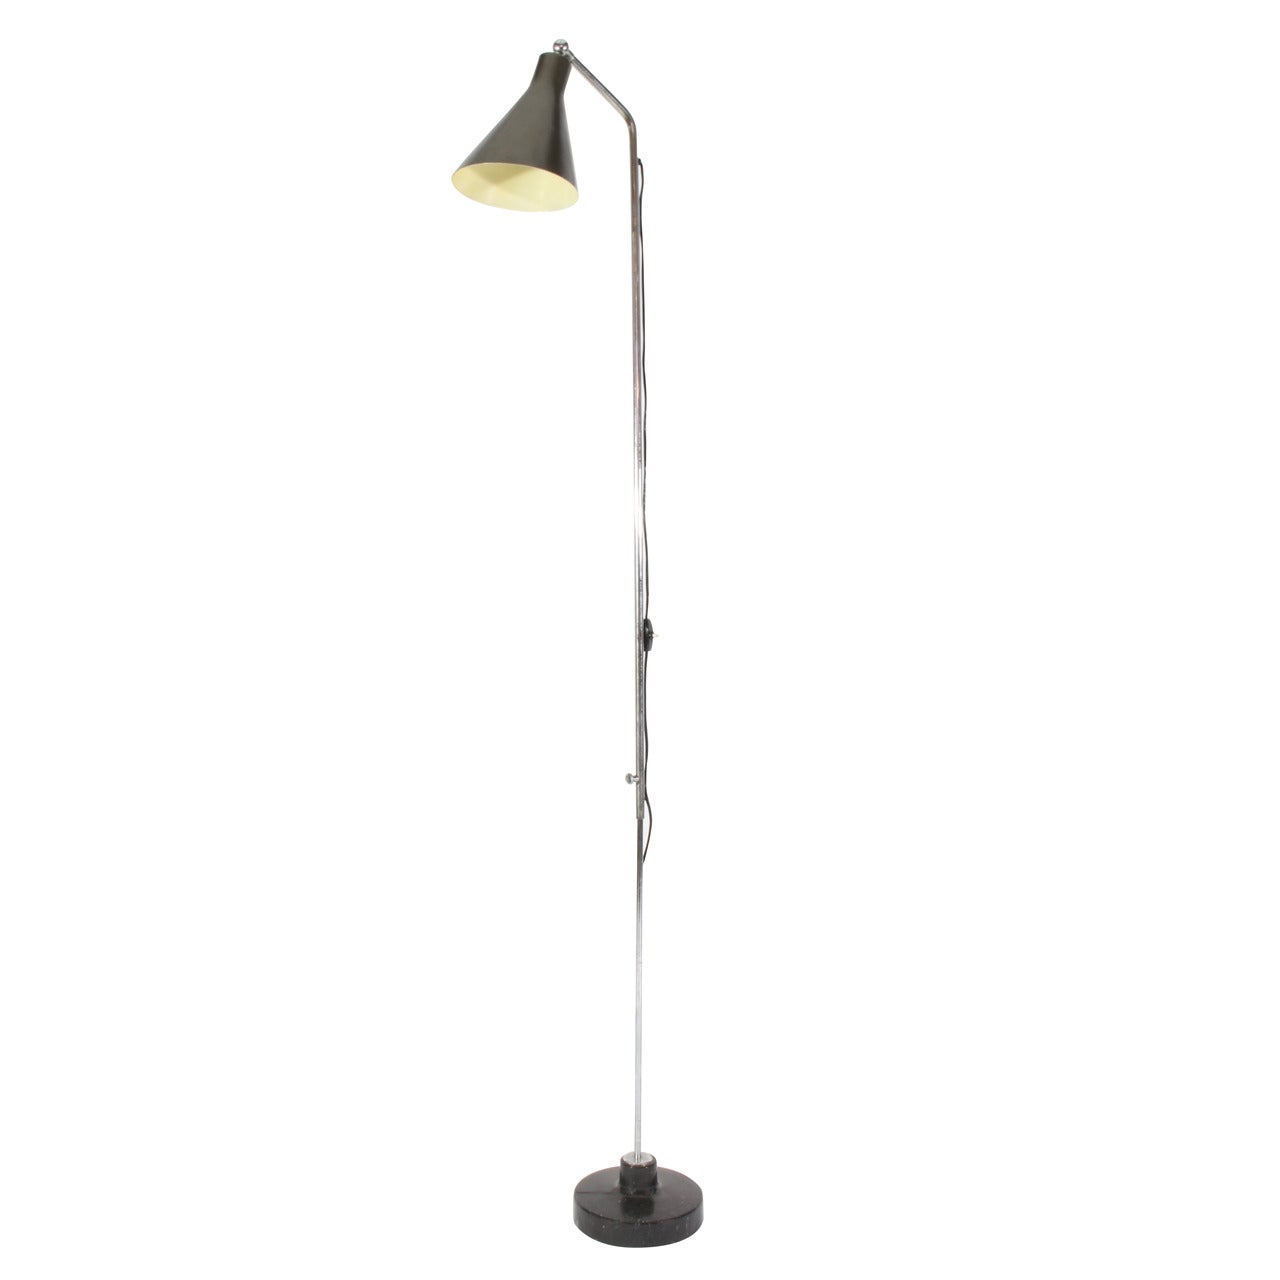 Ignazio Gardella Lte Three Floor Lamp For Sale